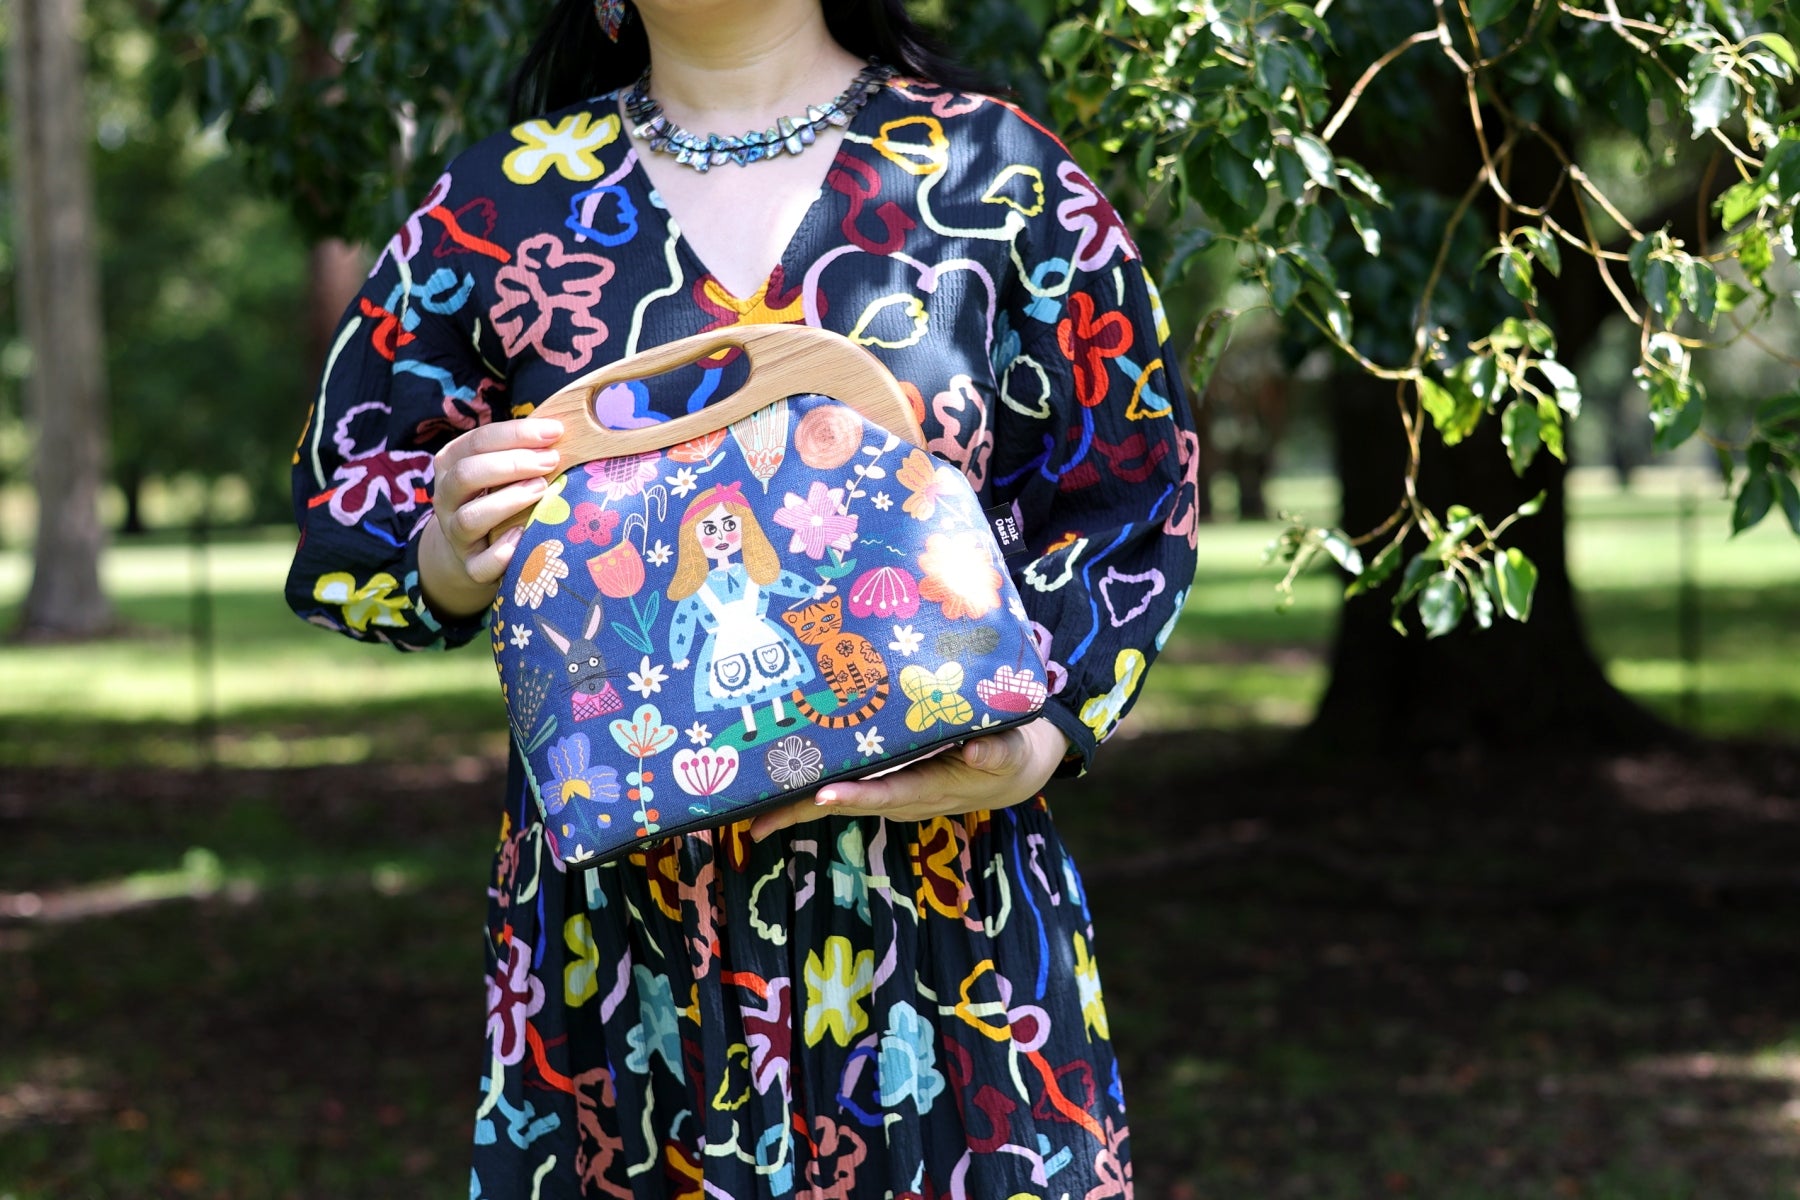 Alice in wonderland Clutch Bag Handmade in Australia | PINK OASIS